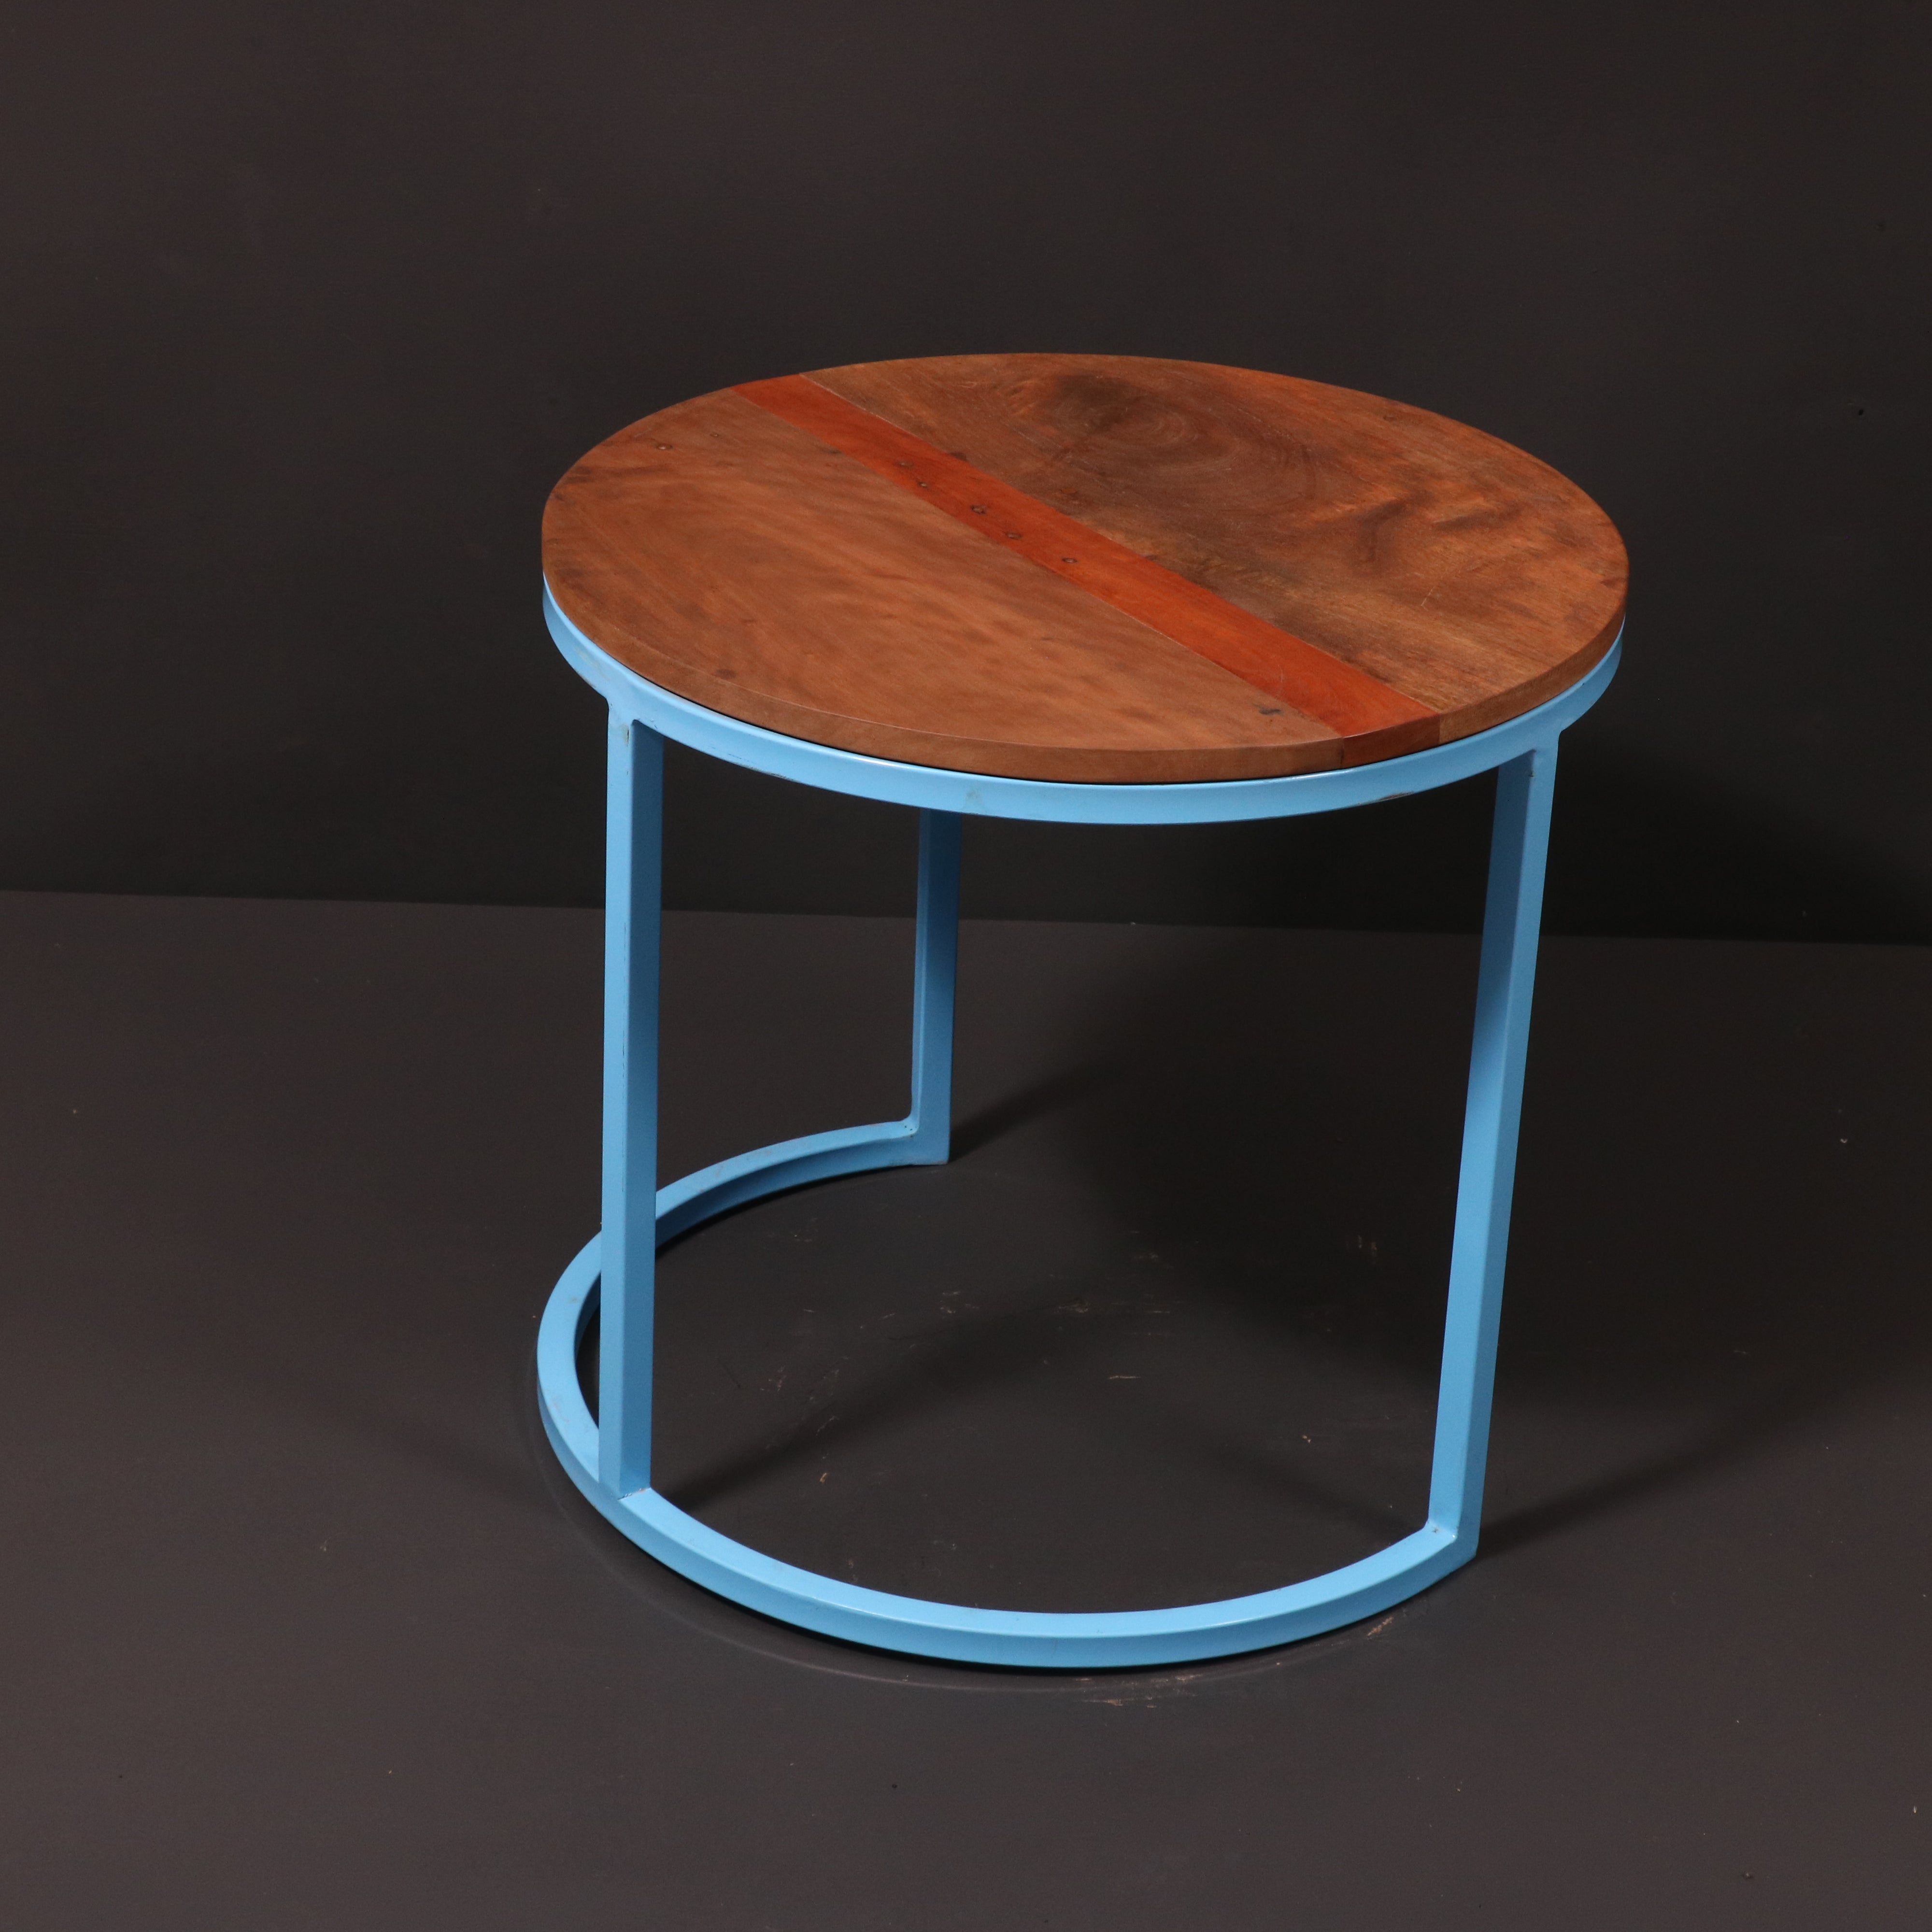 (Set of 3) Metallic Table Stand Medium (16 x 16 x 16 Inch) Stool